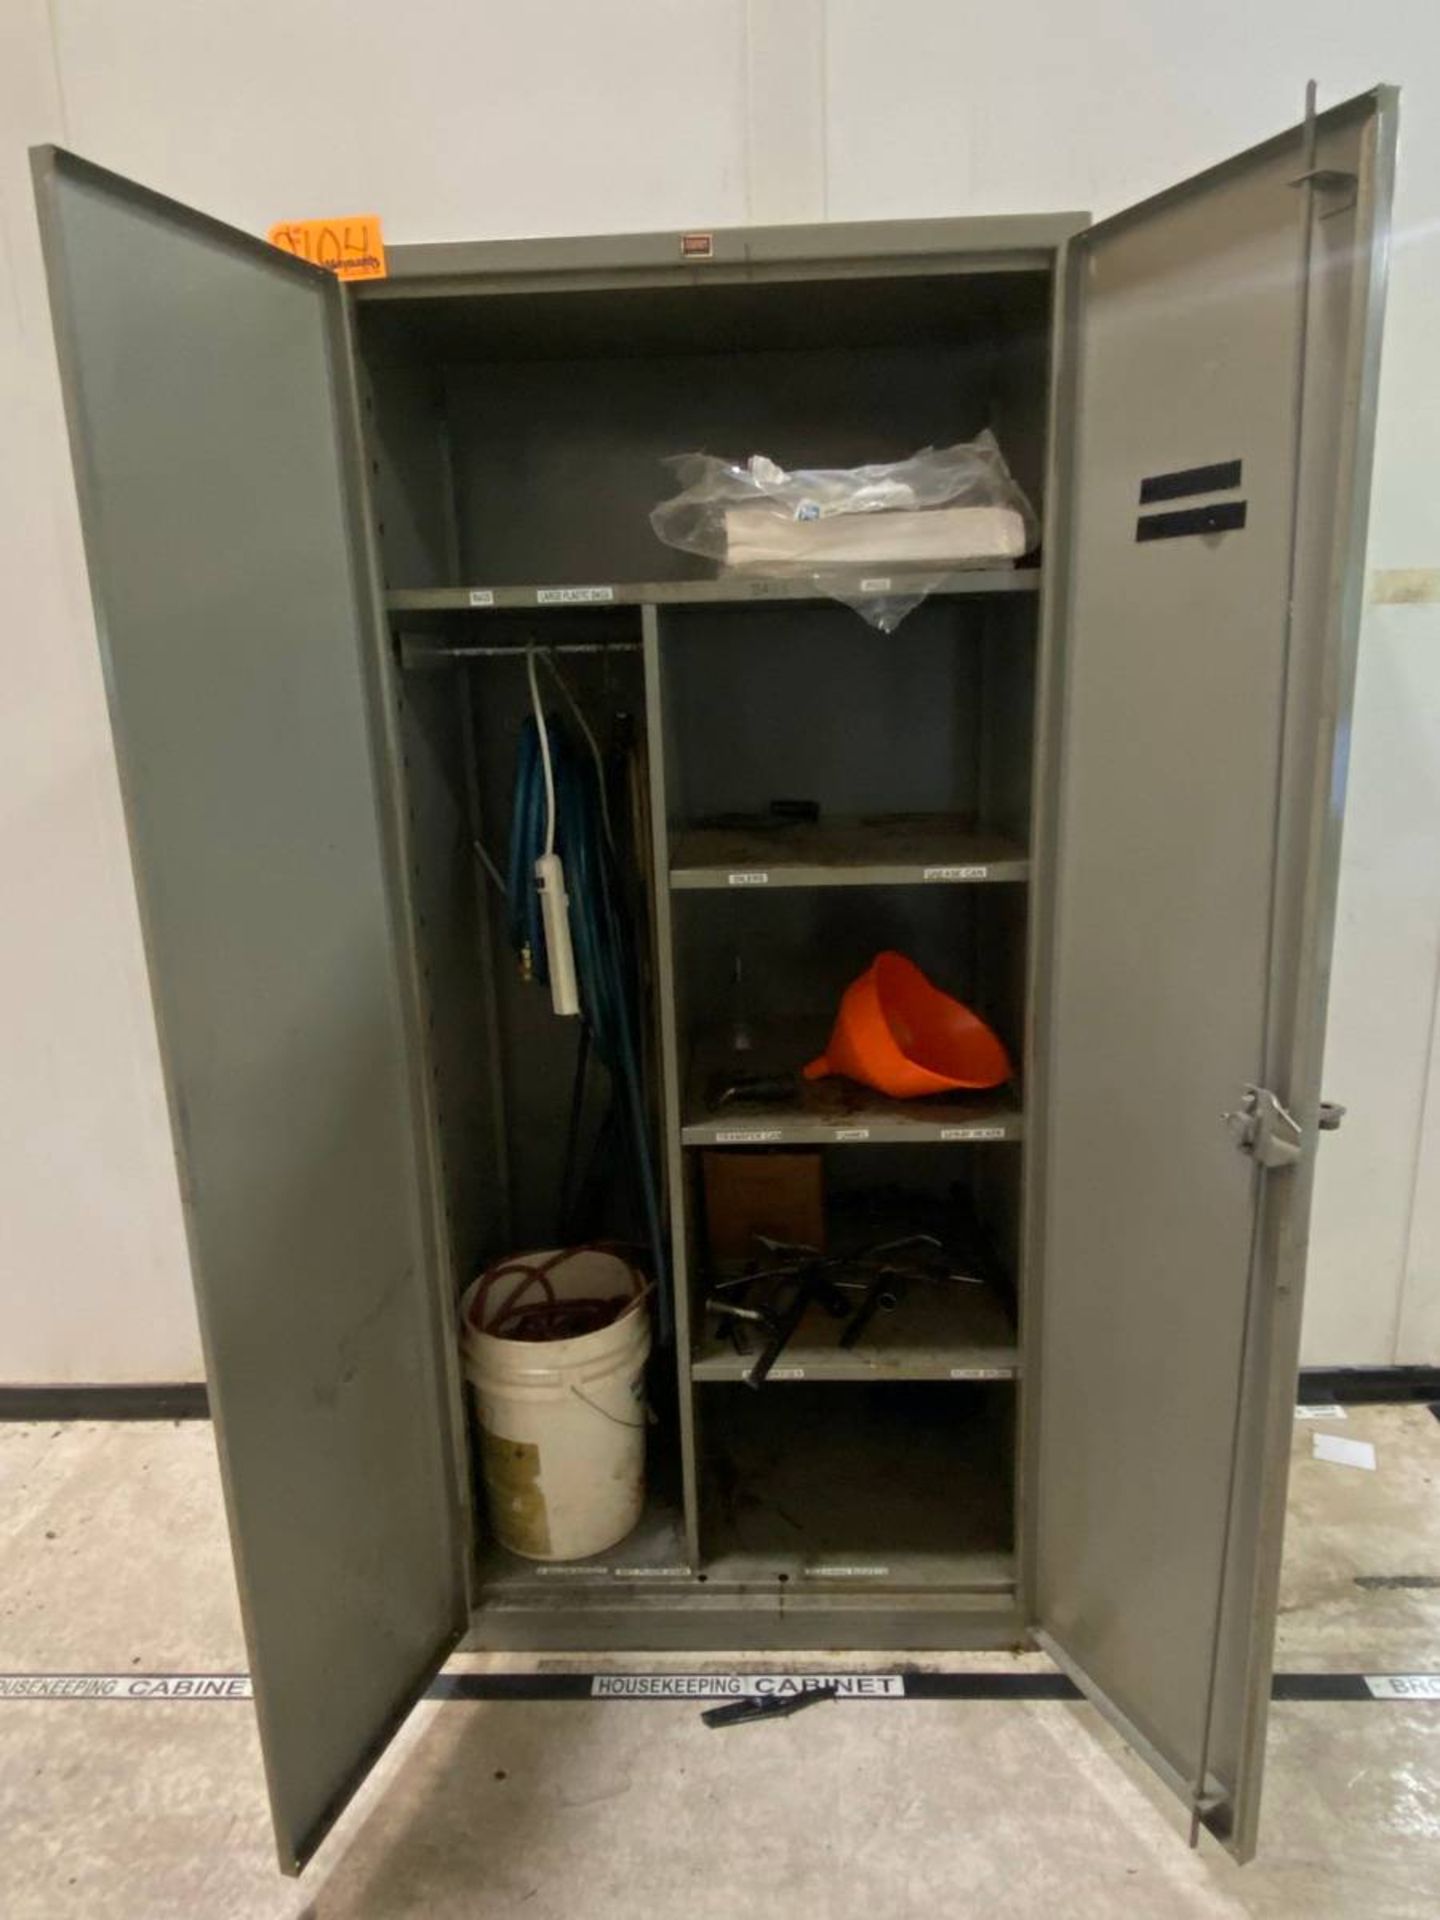 Lyon (1) Heavy-Duty 2-Door Storage Cabinet - Image 2 of 3